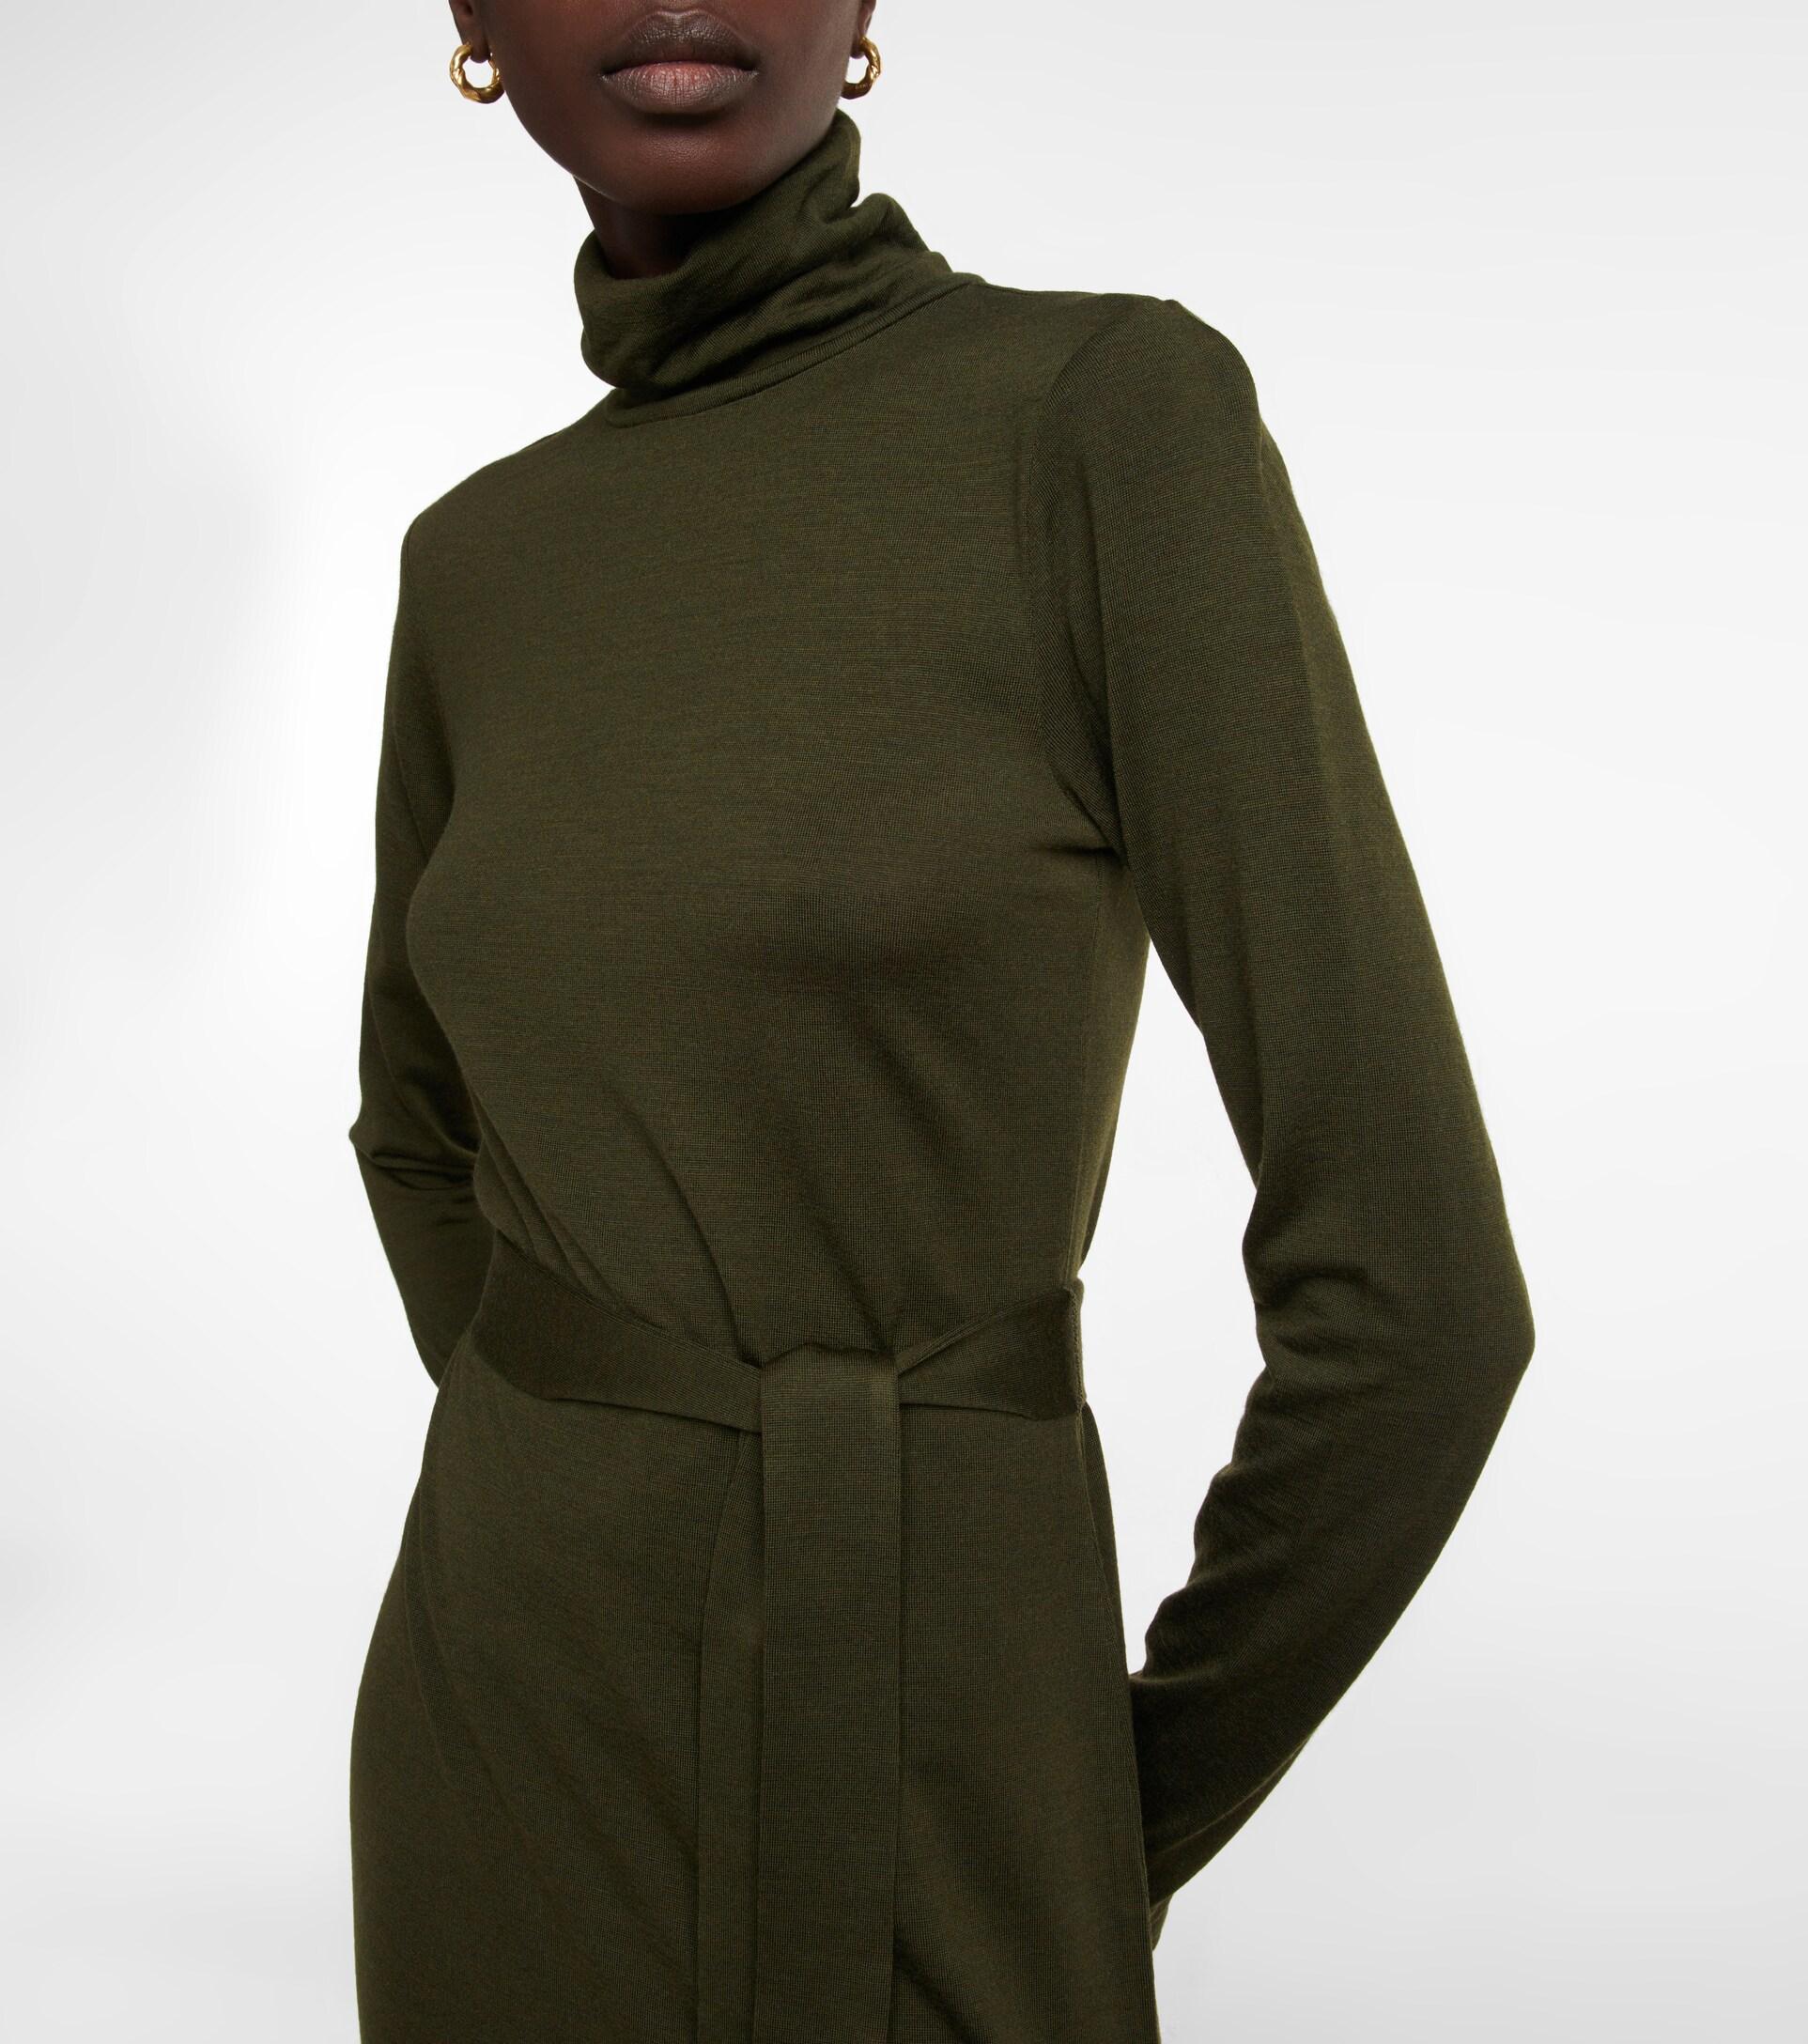 Polo Ralph Lauren Wool-blend Turtleneck Dress in Green | Lyst